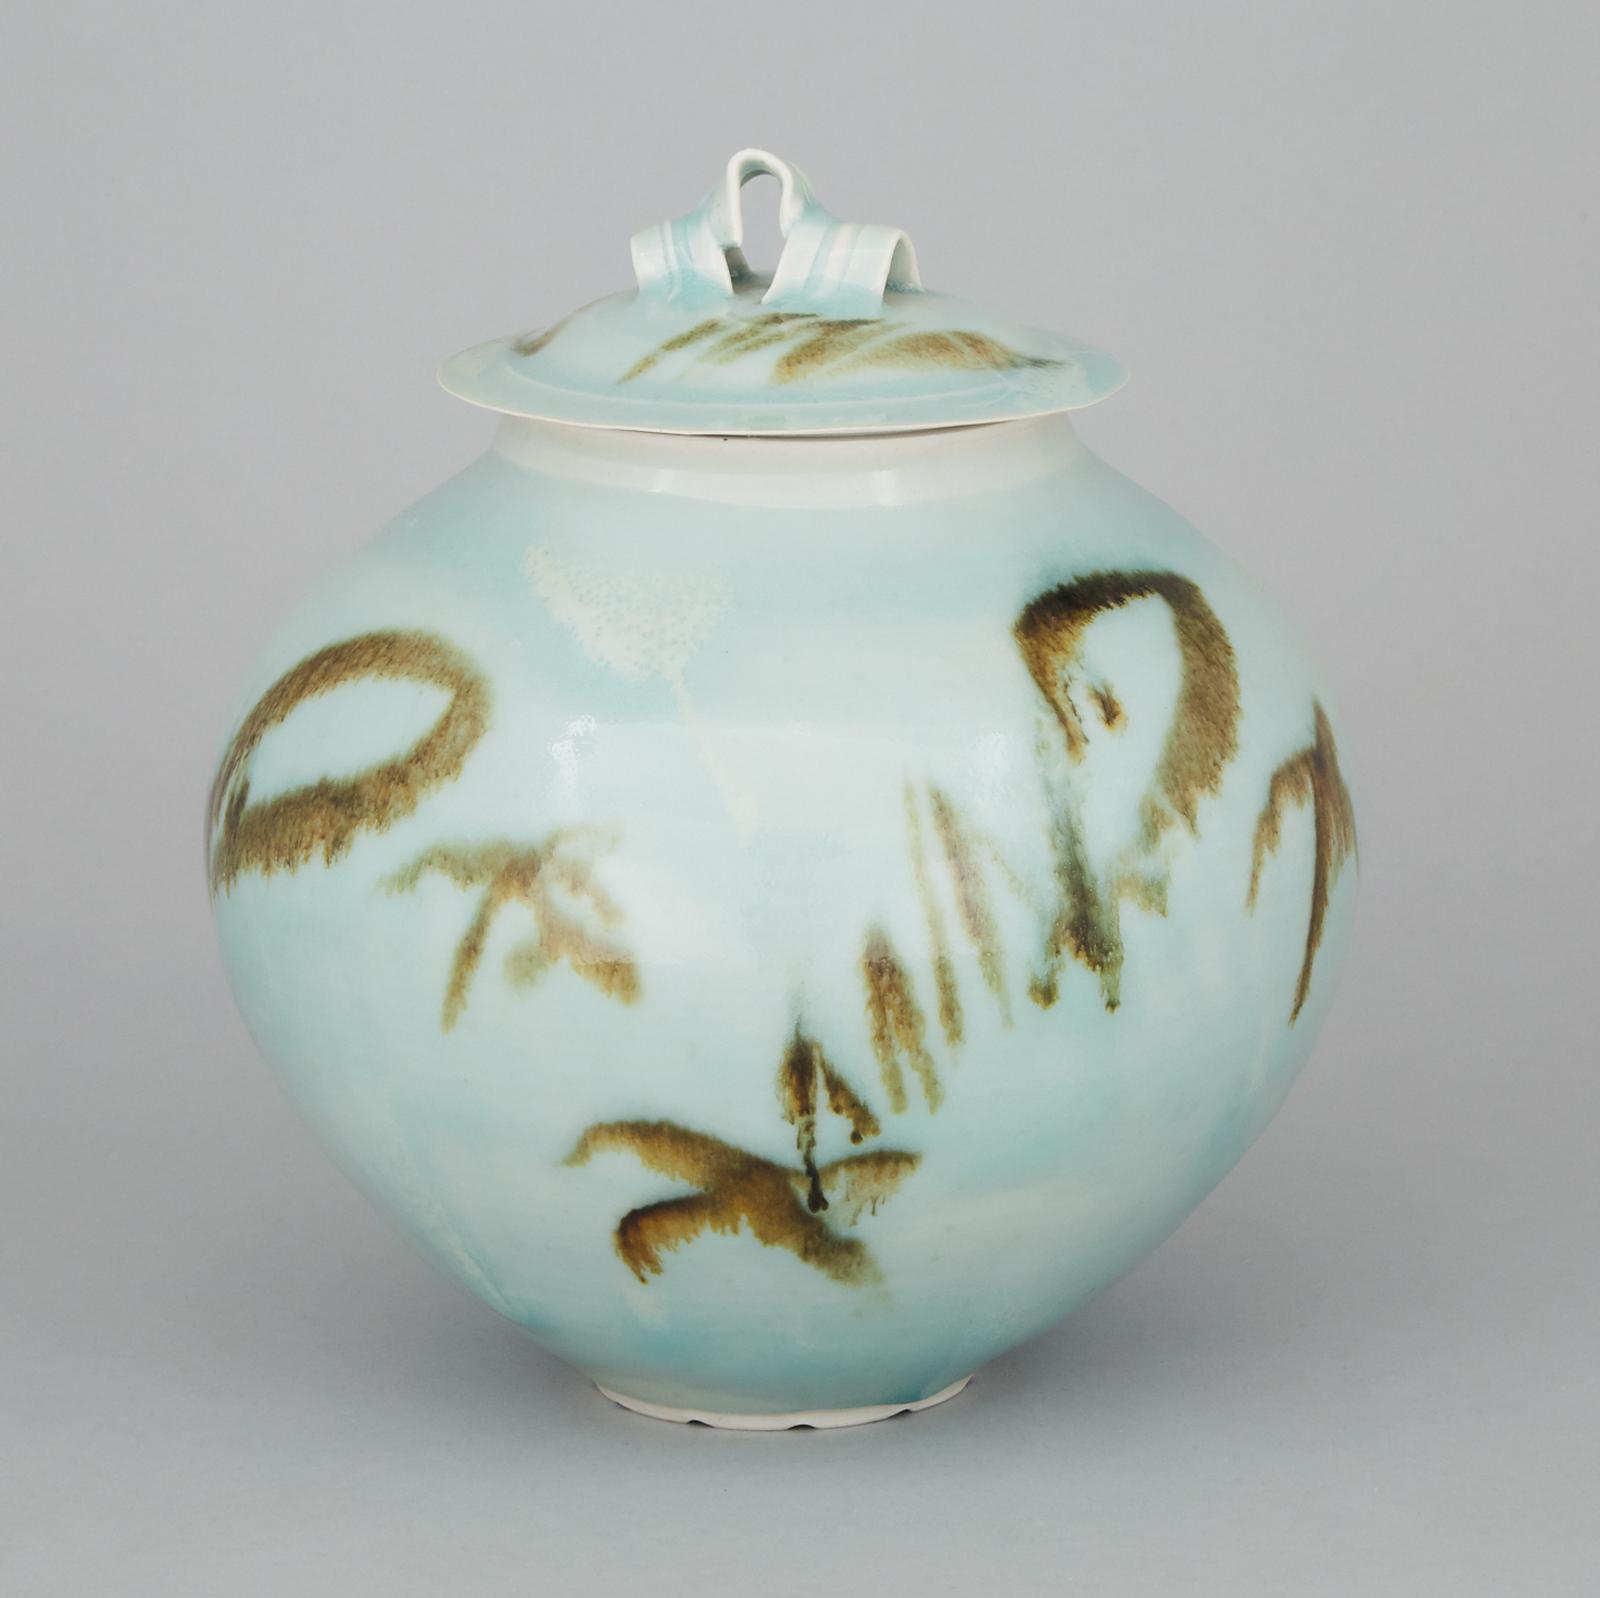 Kayo O'young (1950) - Celadon Glaze Covered Jar, 1993